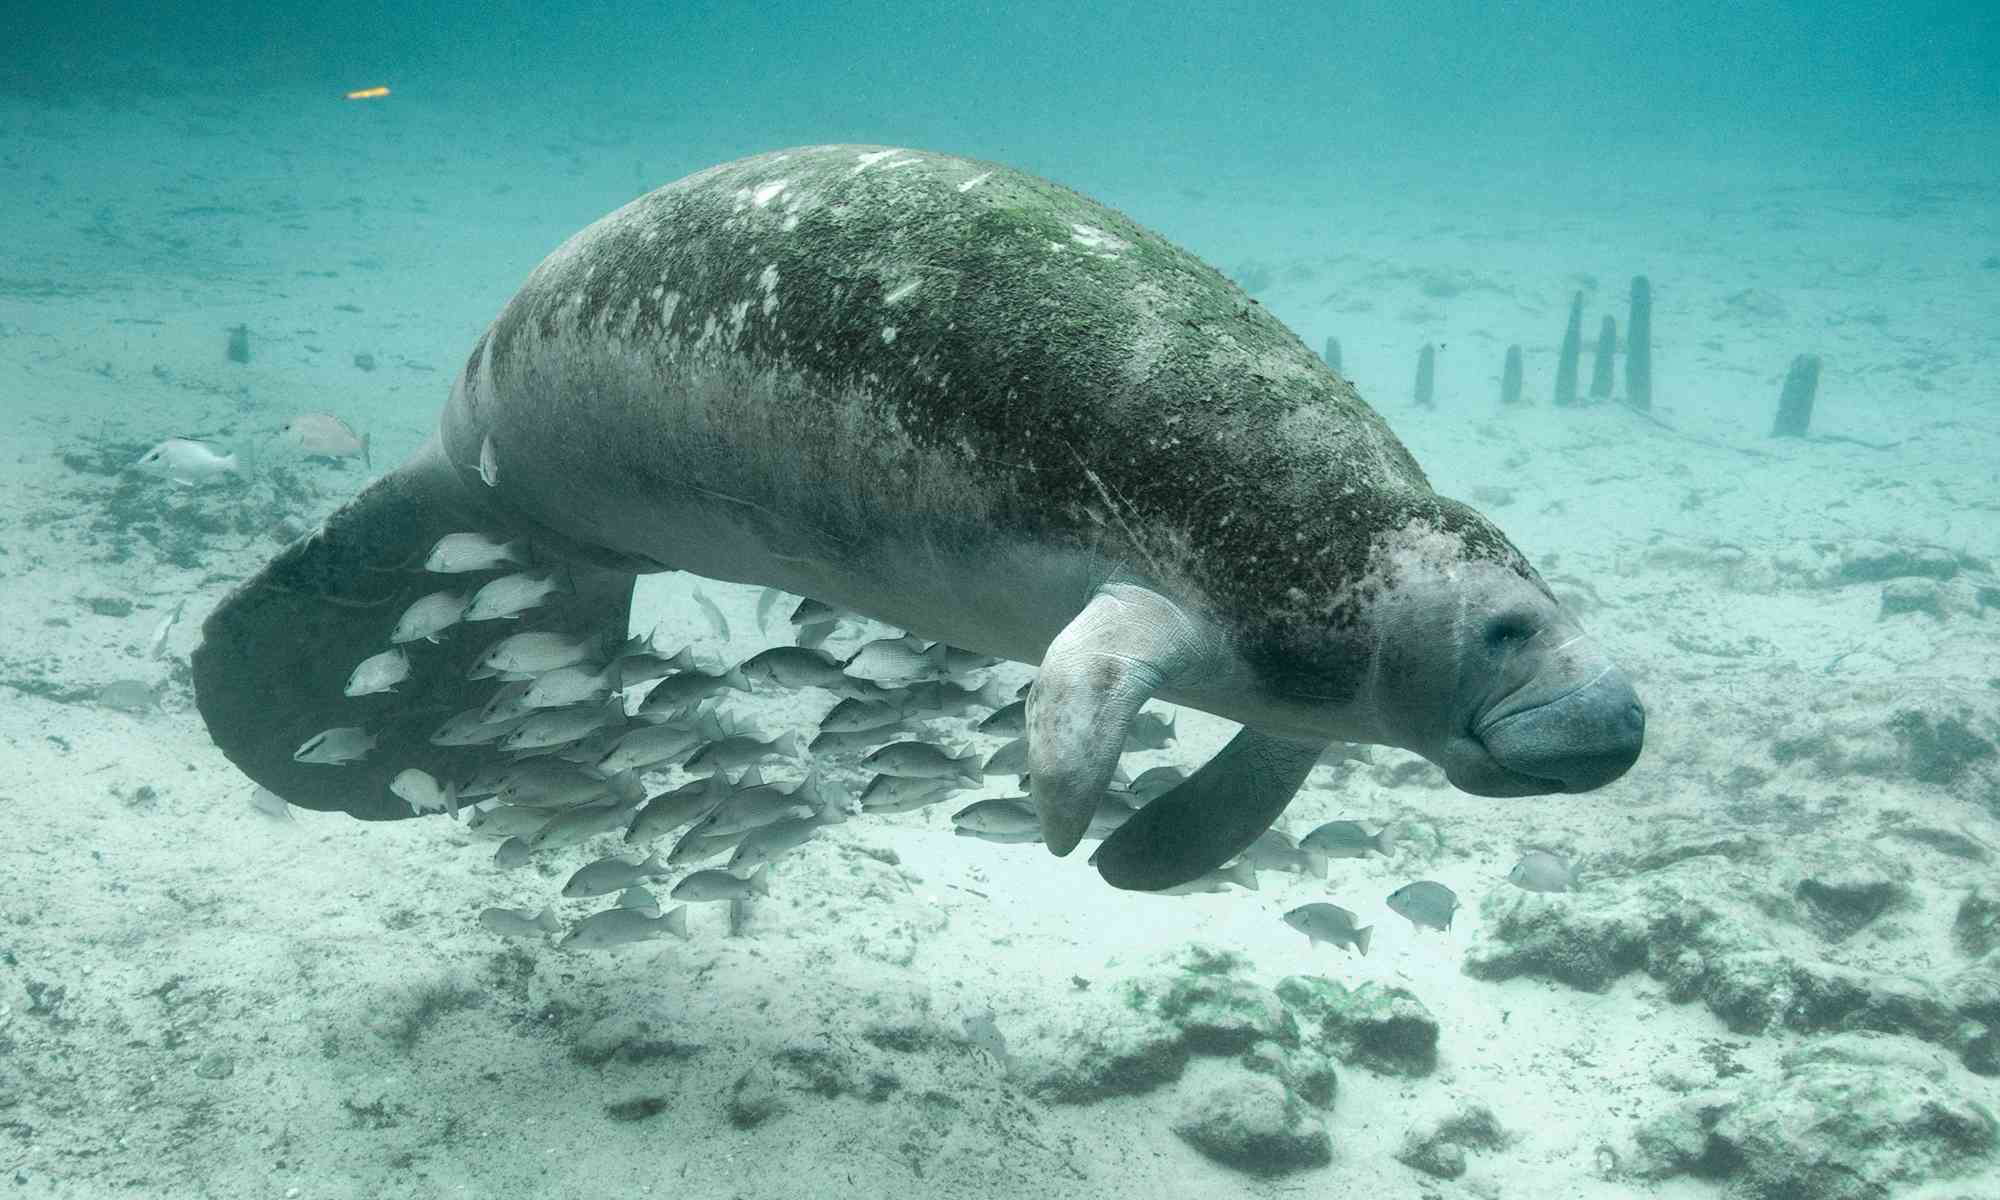 Endangered animals found in the ocean